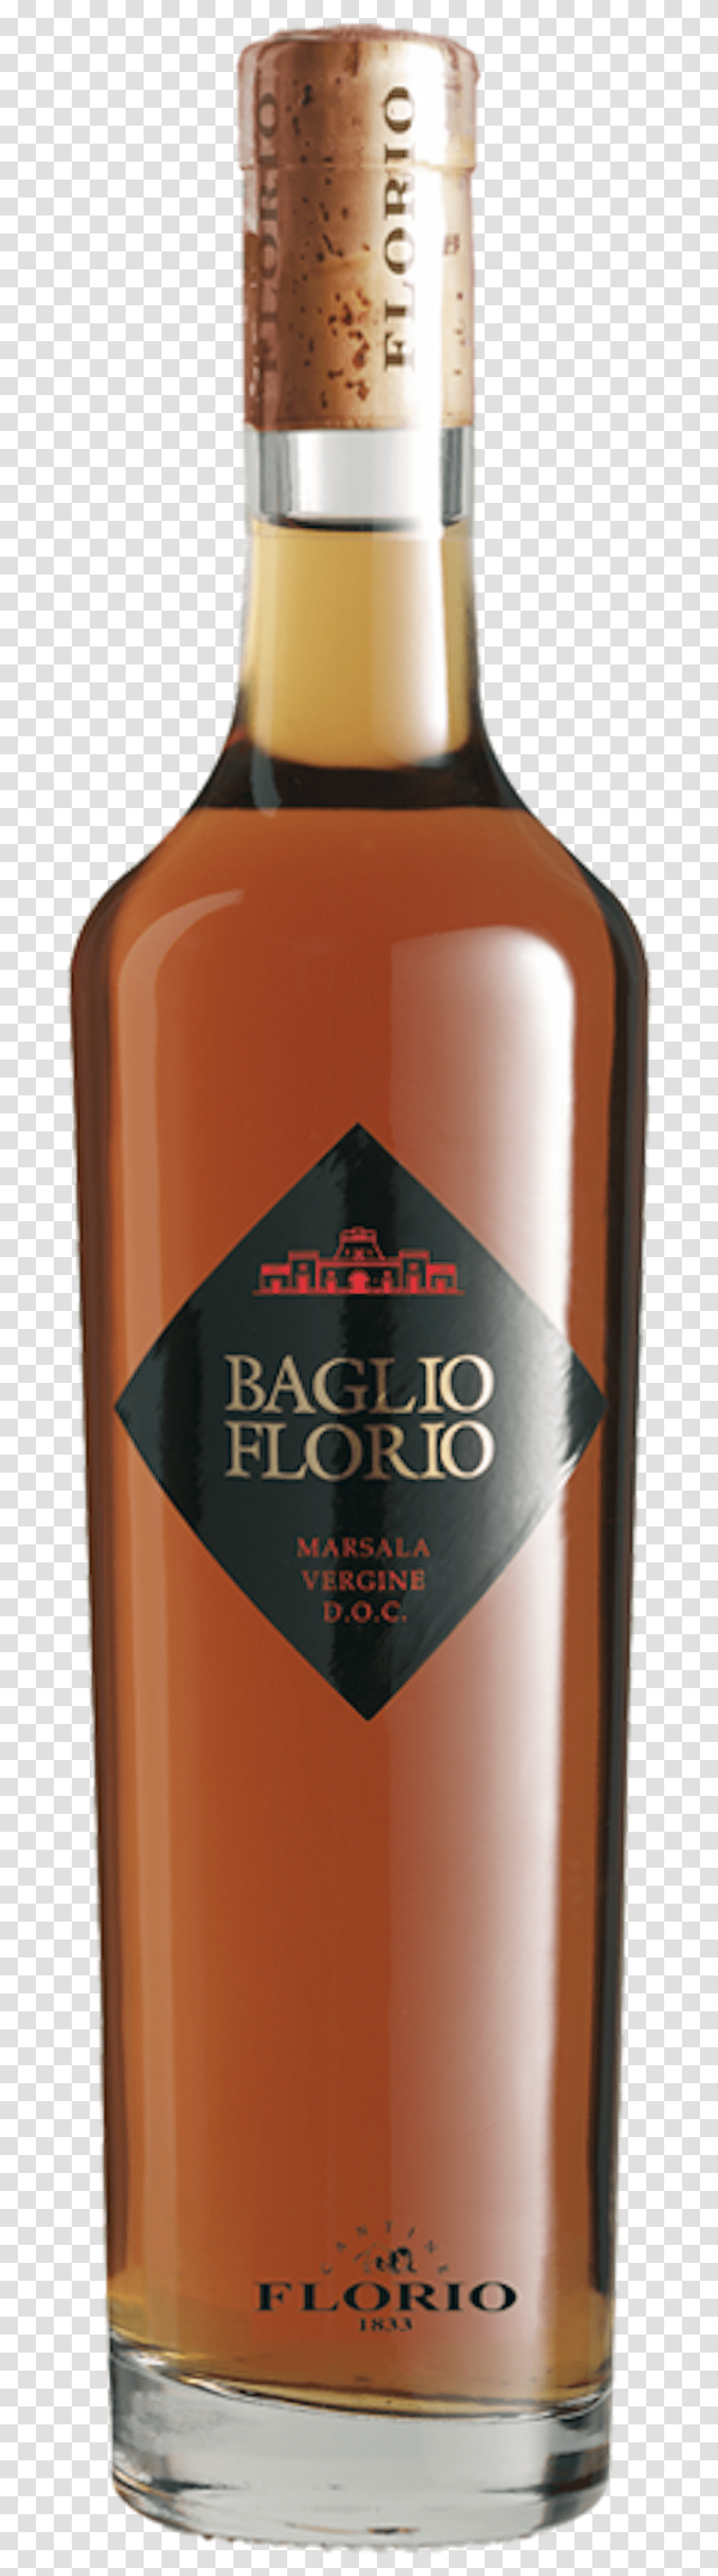 Baglio Florio Marsala Vergine Doc, Alcohol, Beverage, Liquor, Bottle Transparent Png